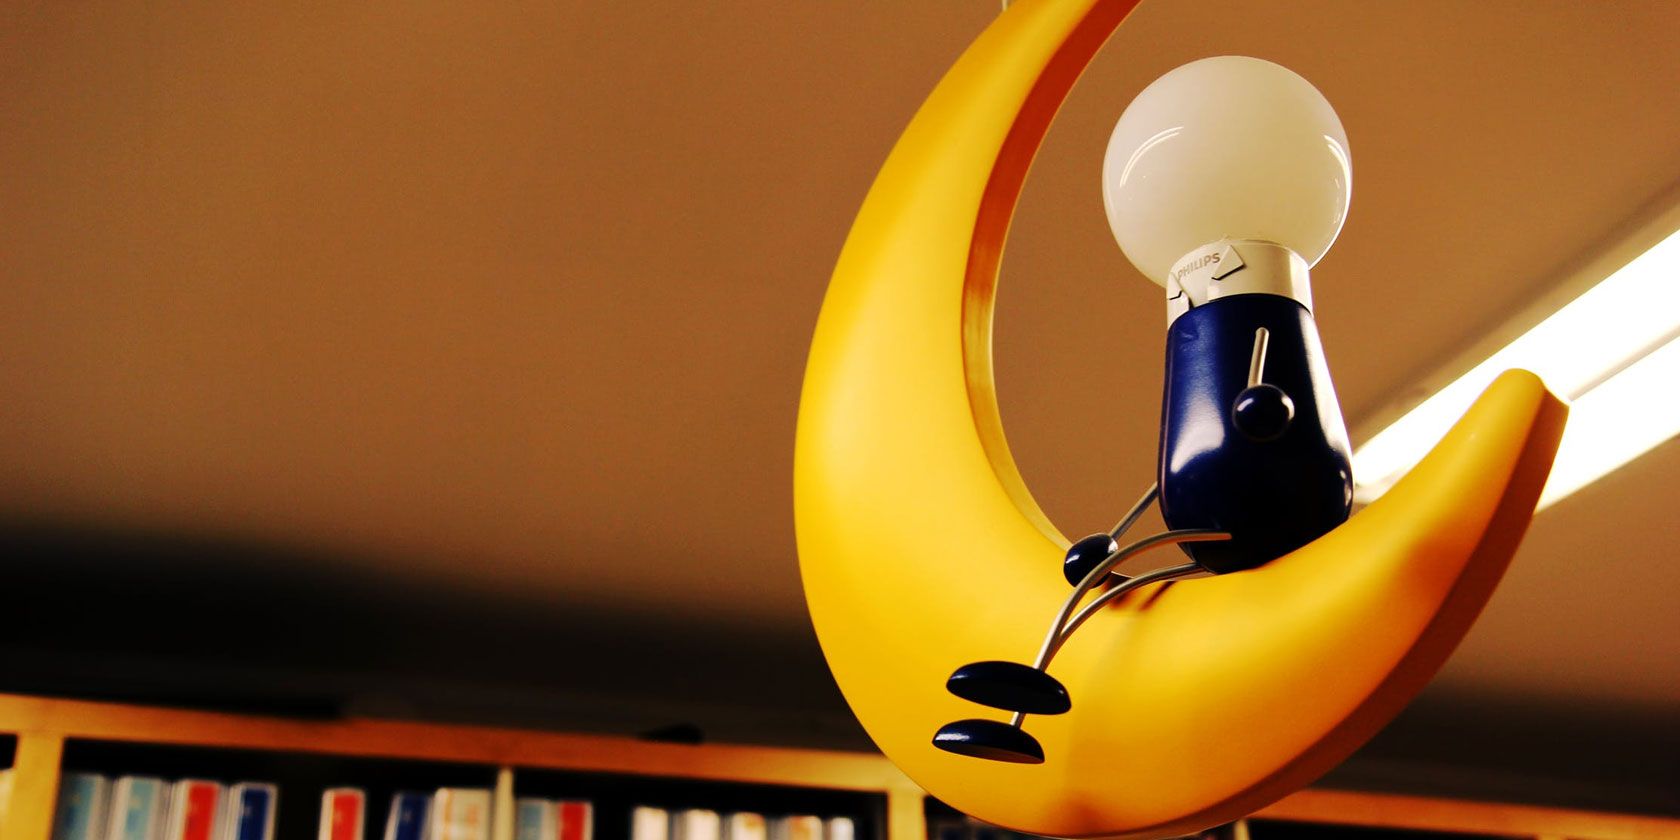 smart-bulbs-risk